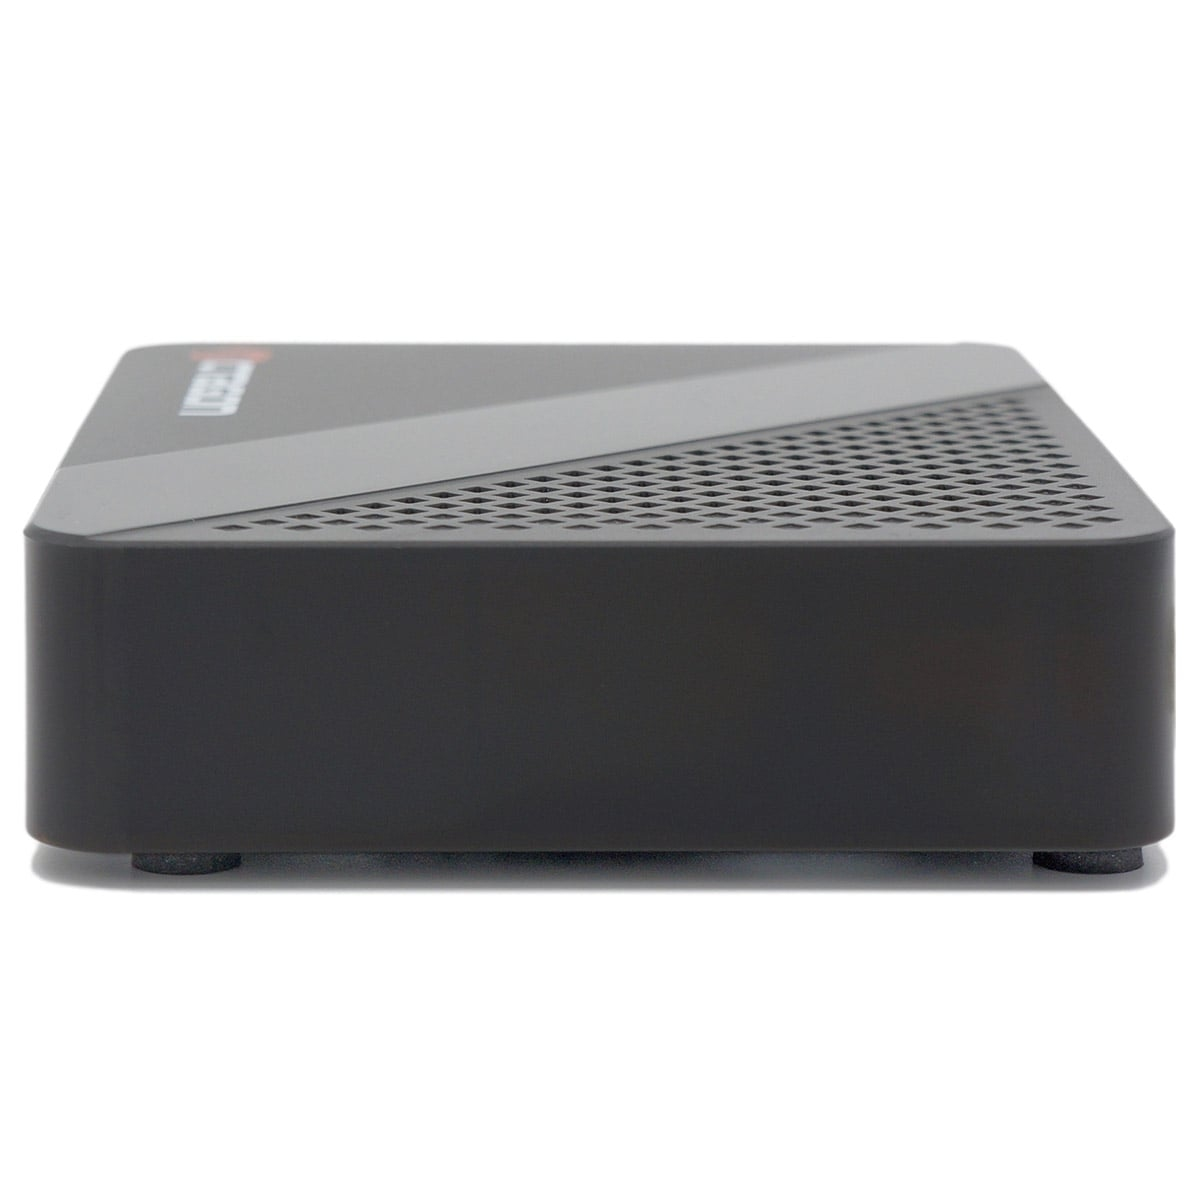 HD Mediaplayer Full OCTAGON Linux H.265 (Schwarz) 1080p Octagon IP-Receiver LAN SX887